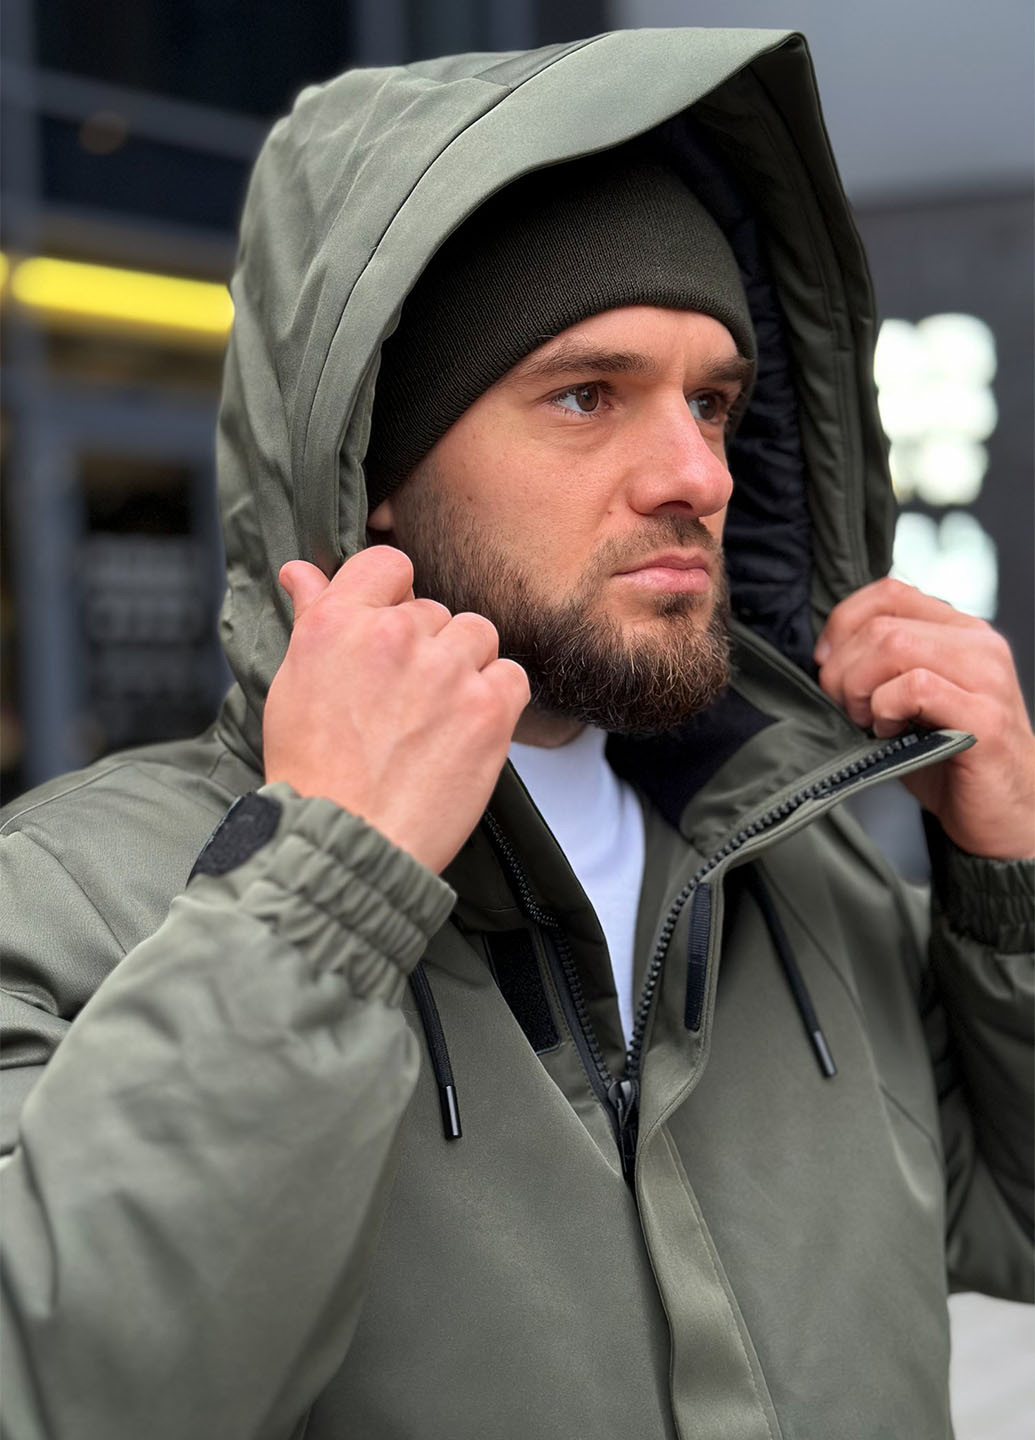 Оливкова (хакі) зимня куртка Trend Collection